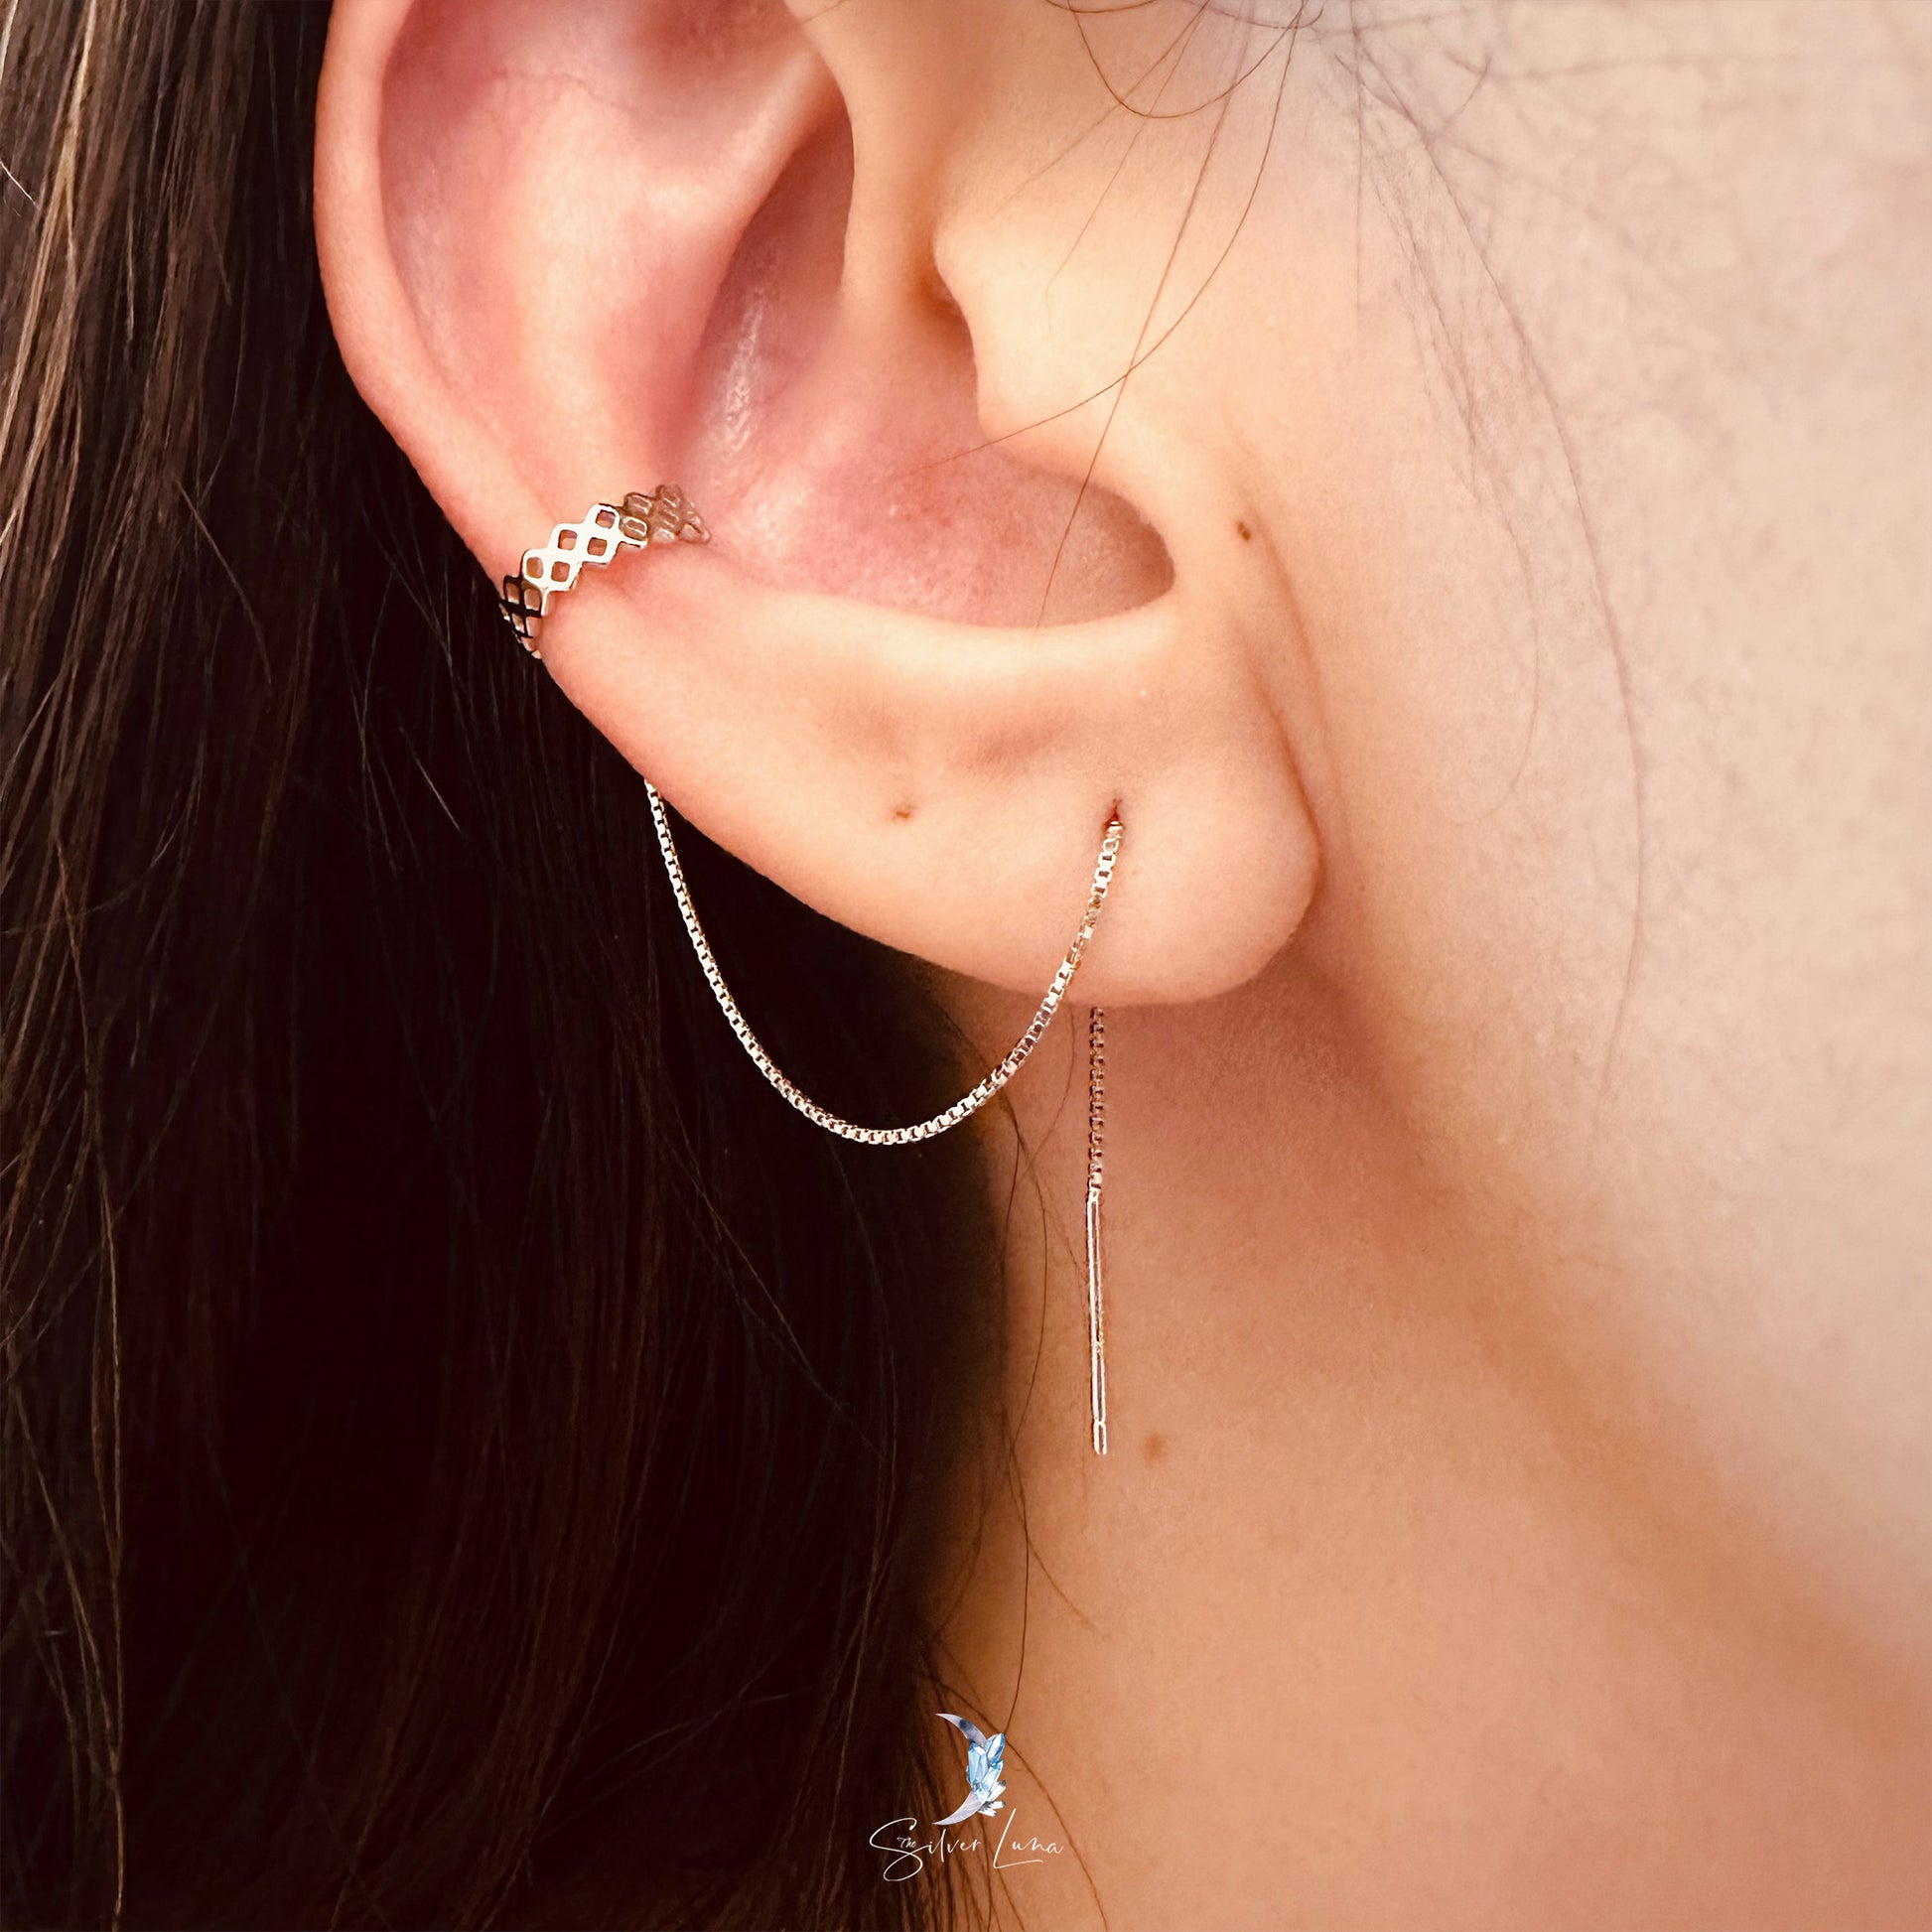 ear cuffs threader earrings